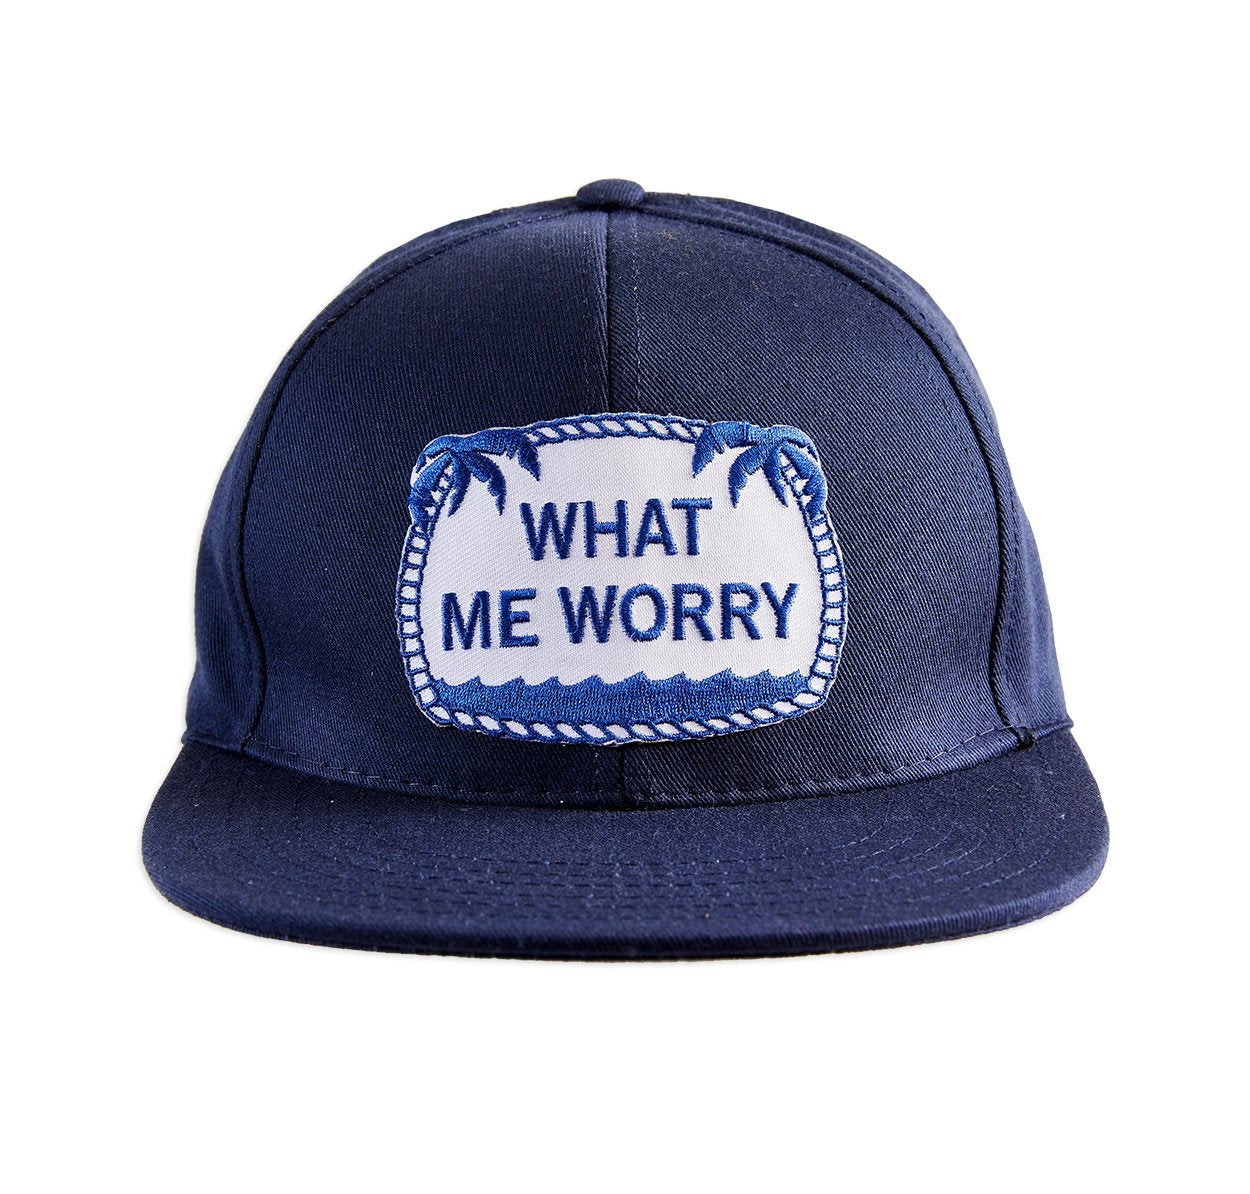 What Me Worry ball cap